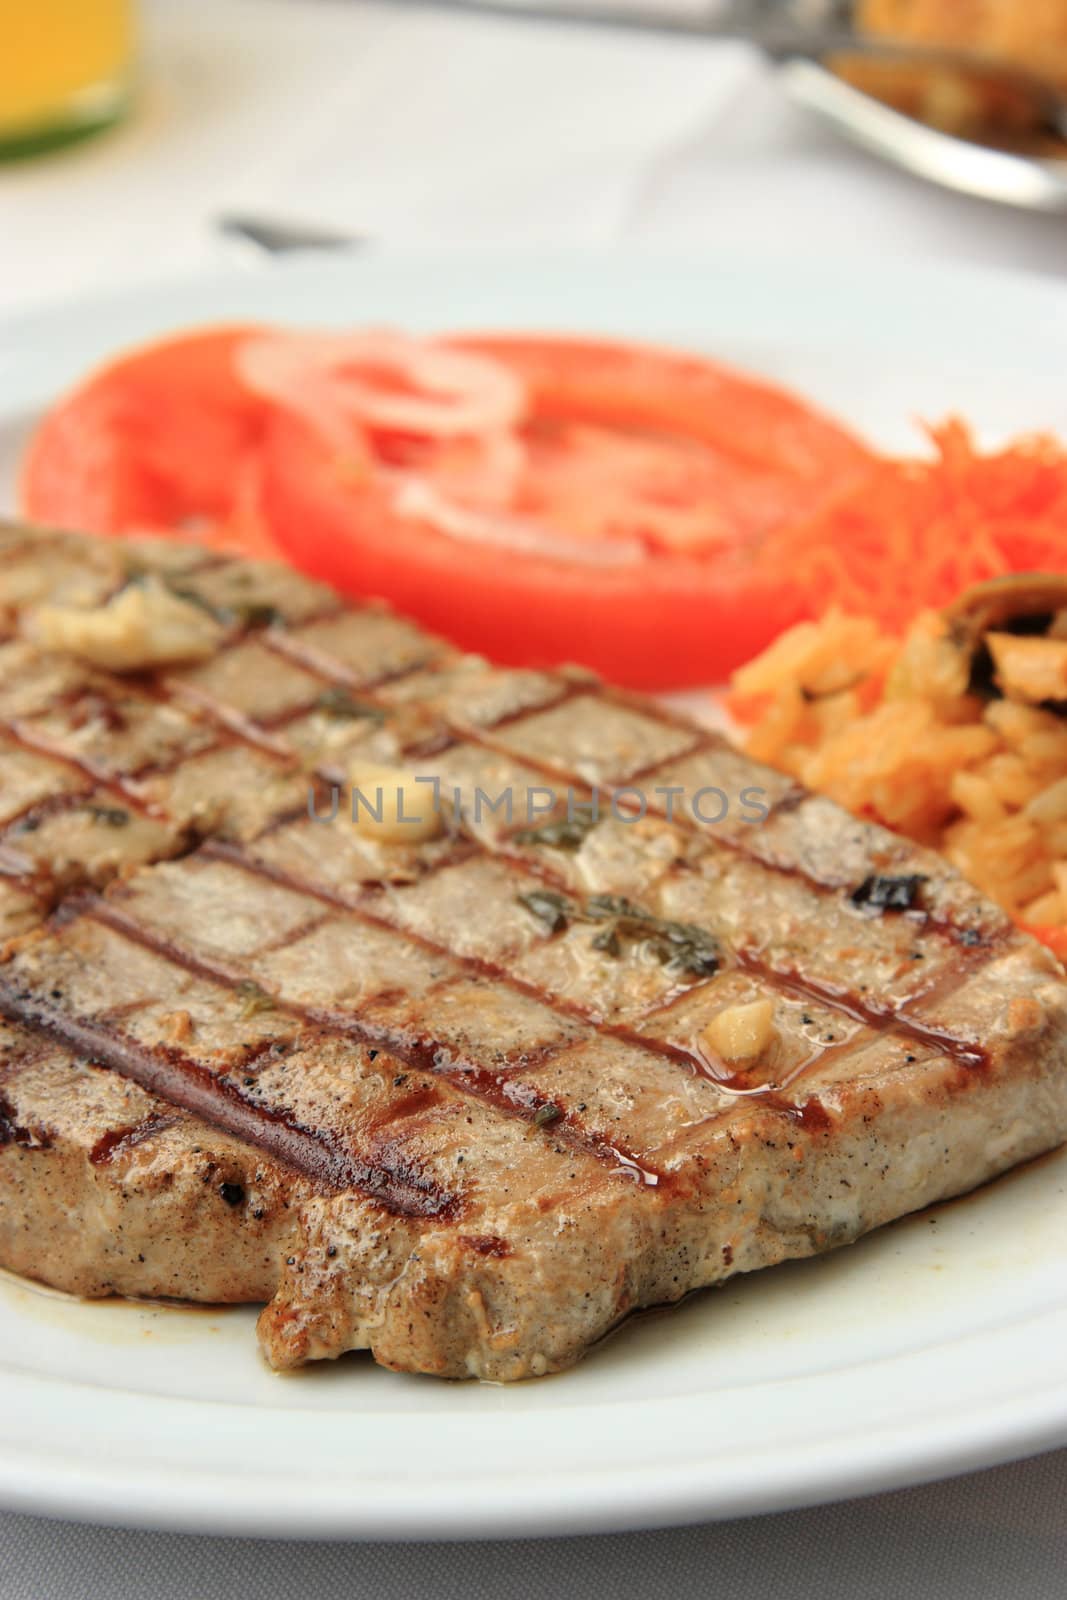 Grilled Tuna steak by simas2